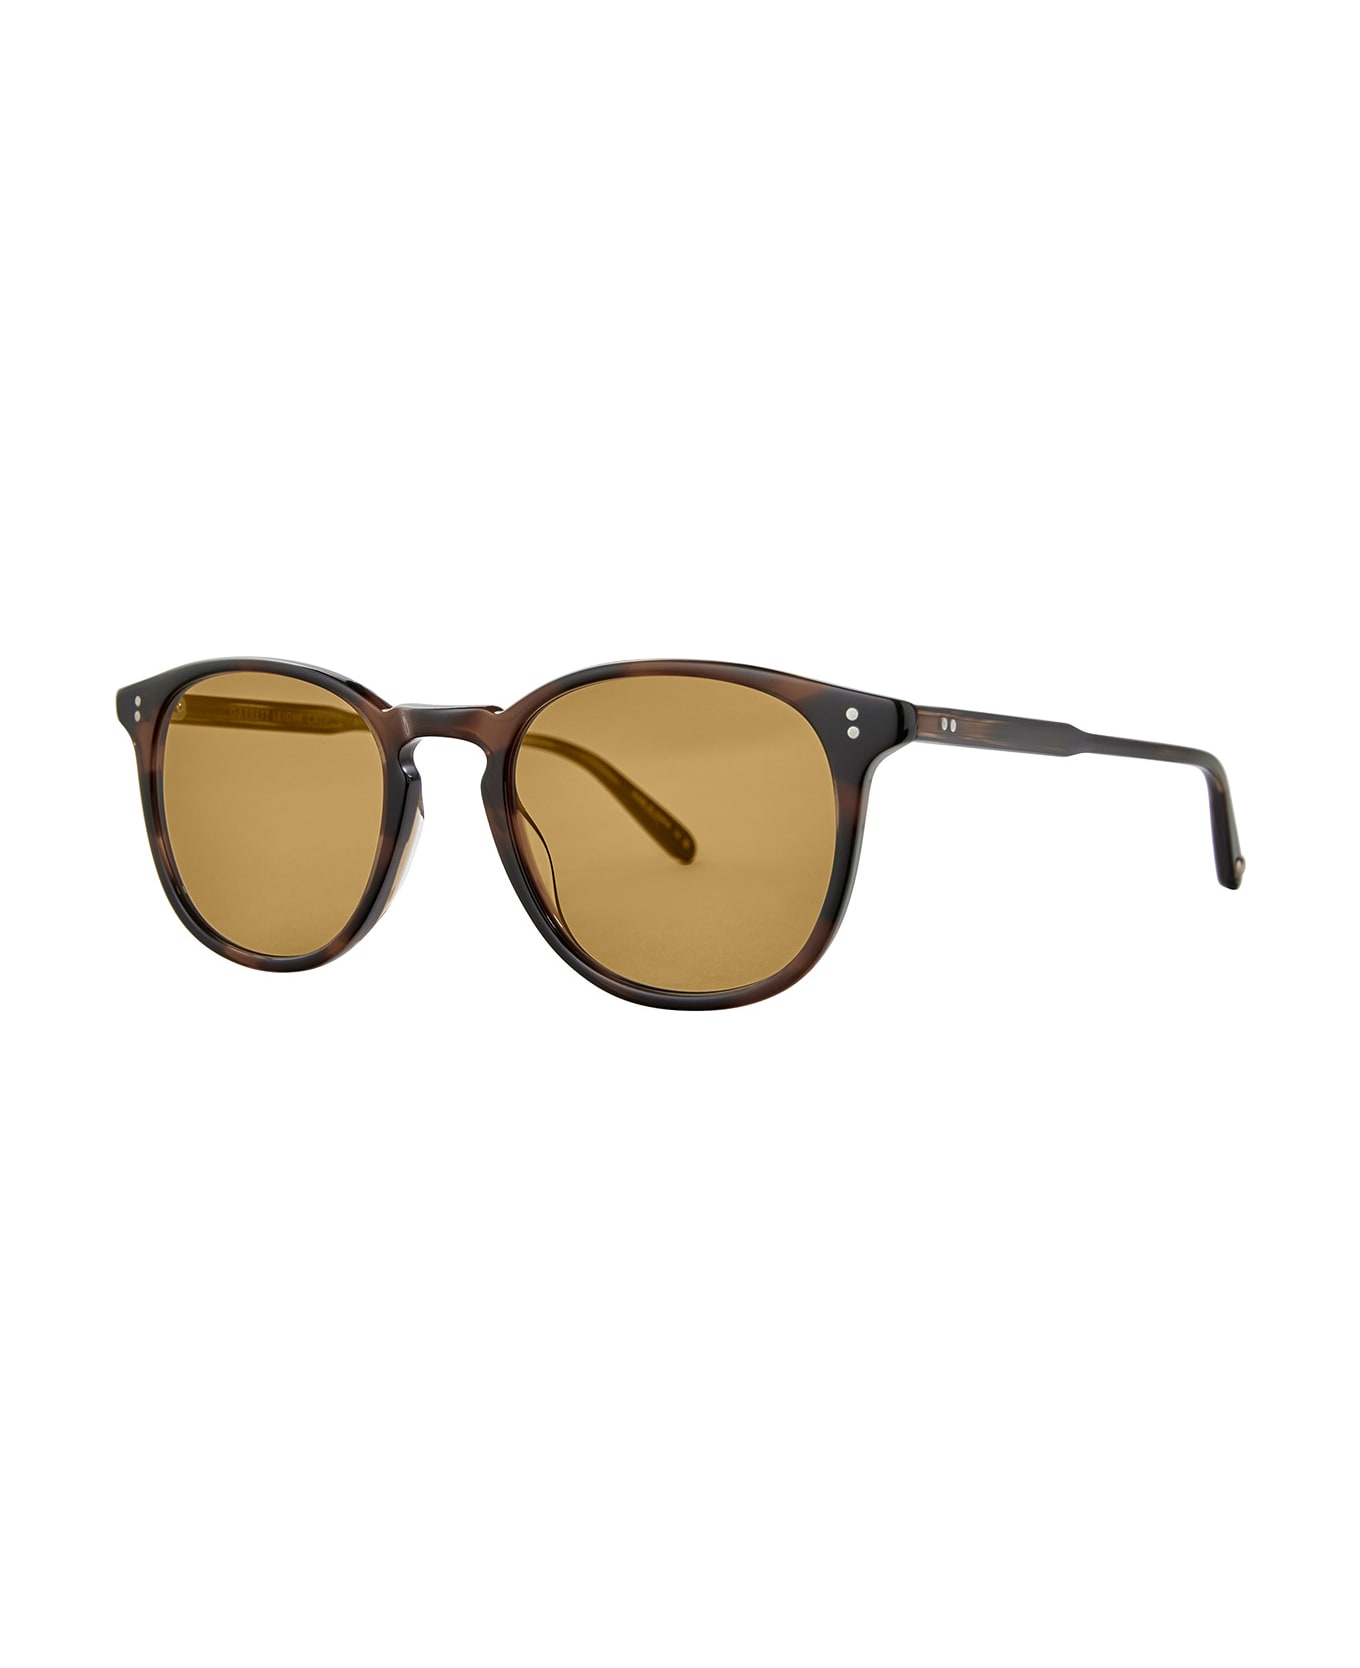 Garrett Leight Kinney Sun Spotted Brown Shell Sunglasses - Spotted Brown Shell